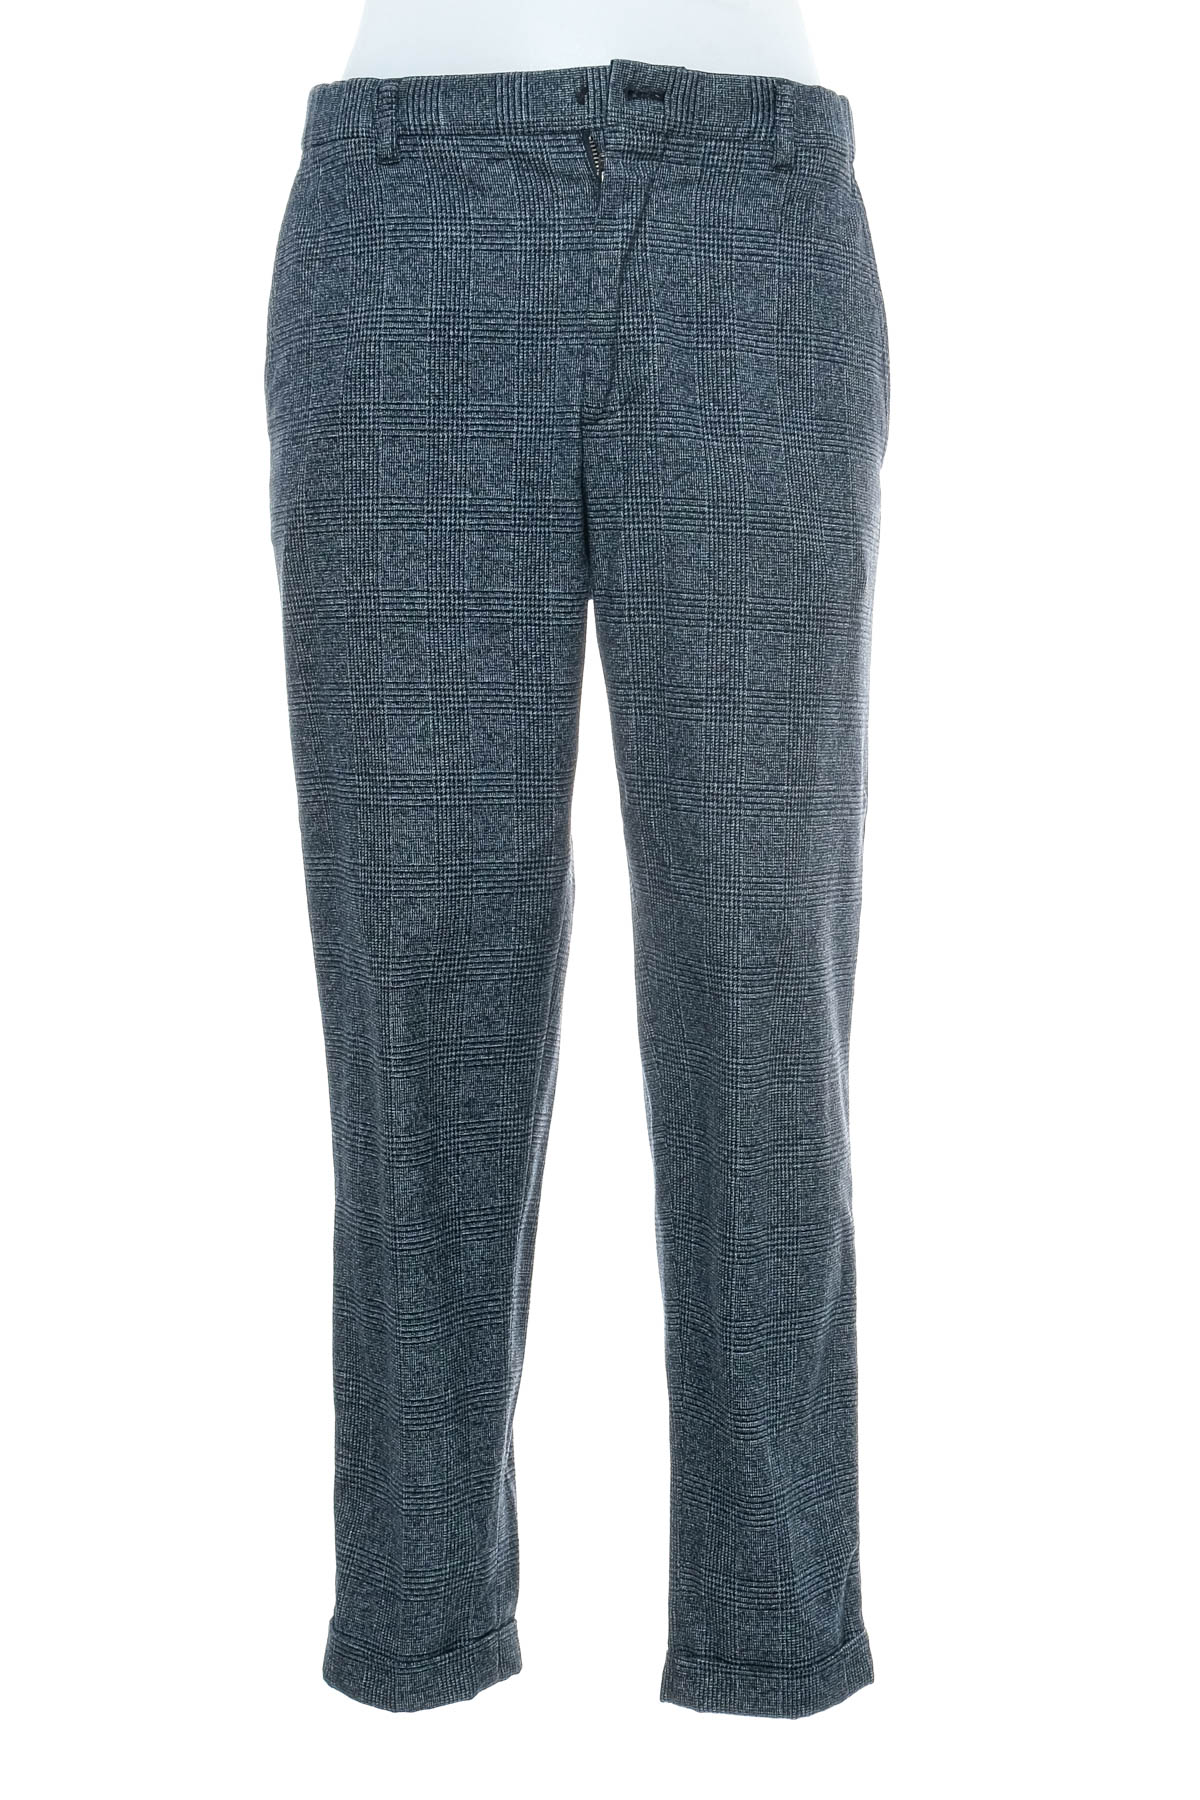 Pantalon pentru bărbați - Strellson - 0